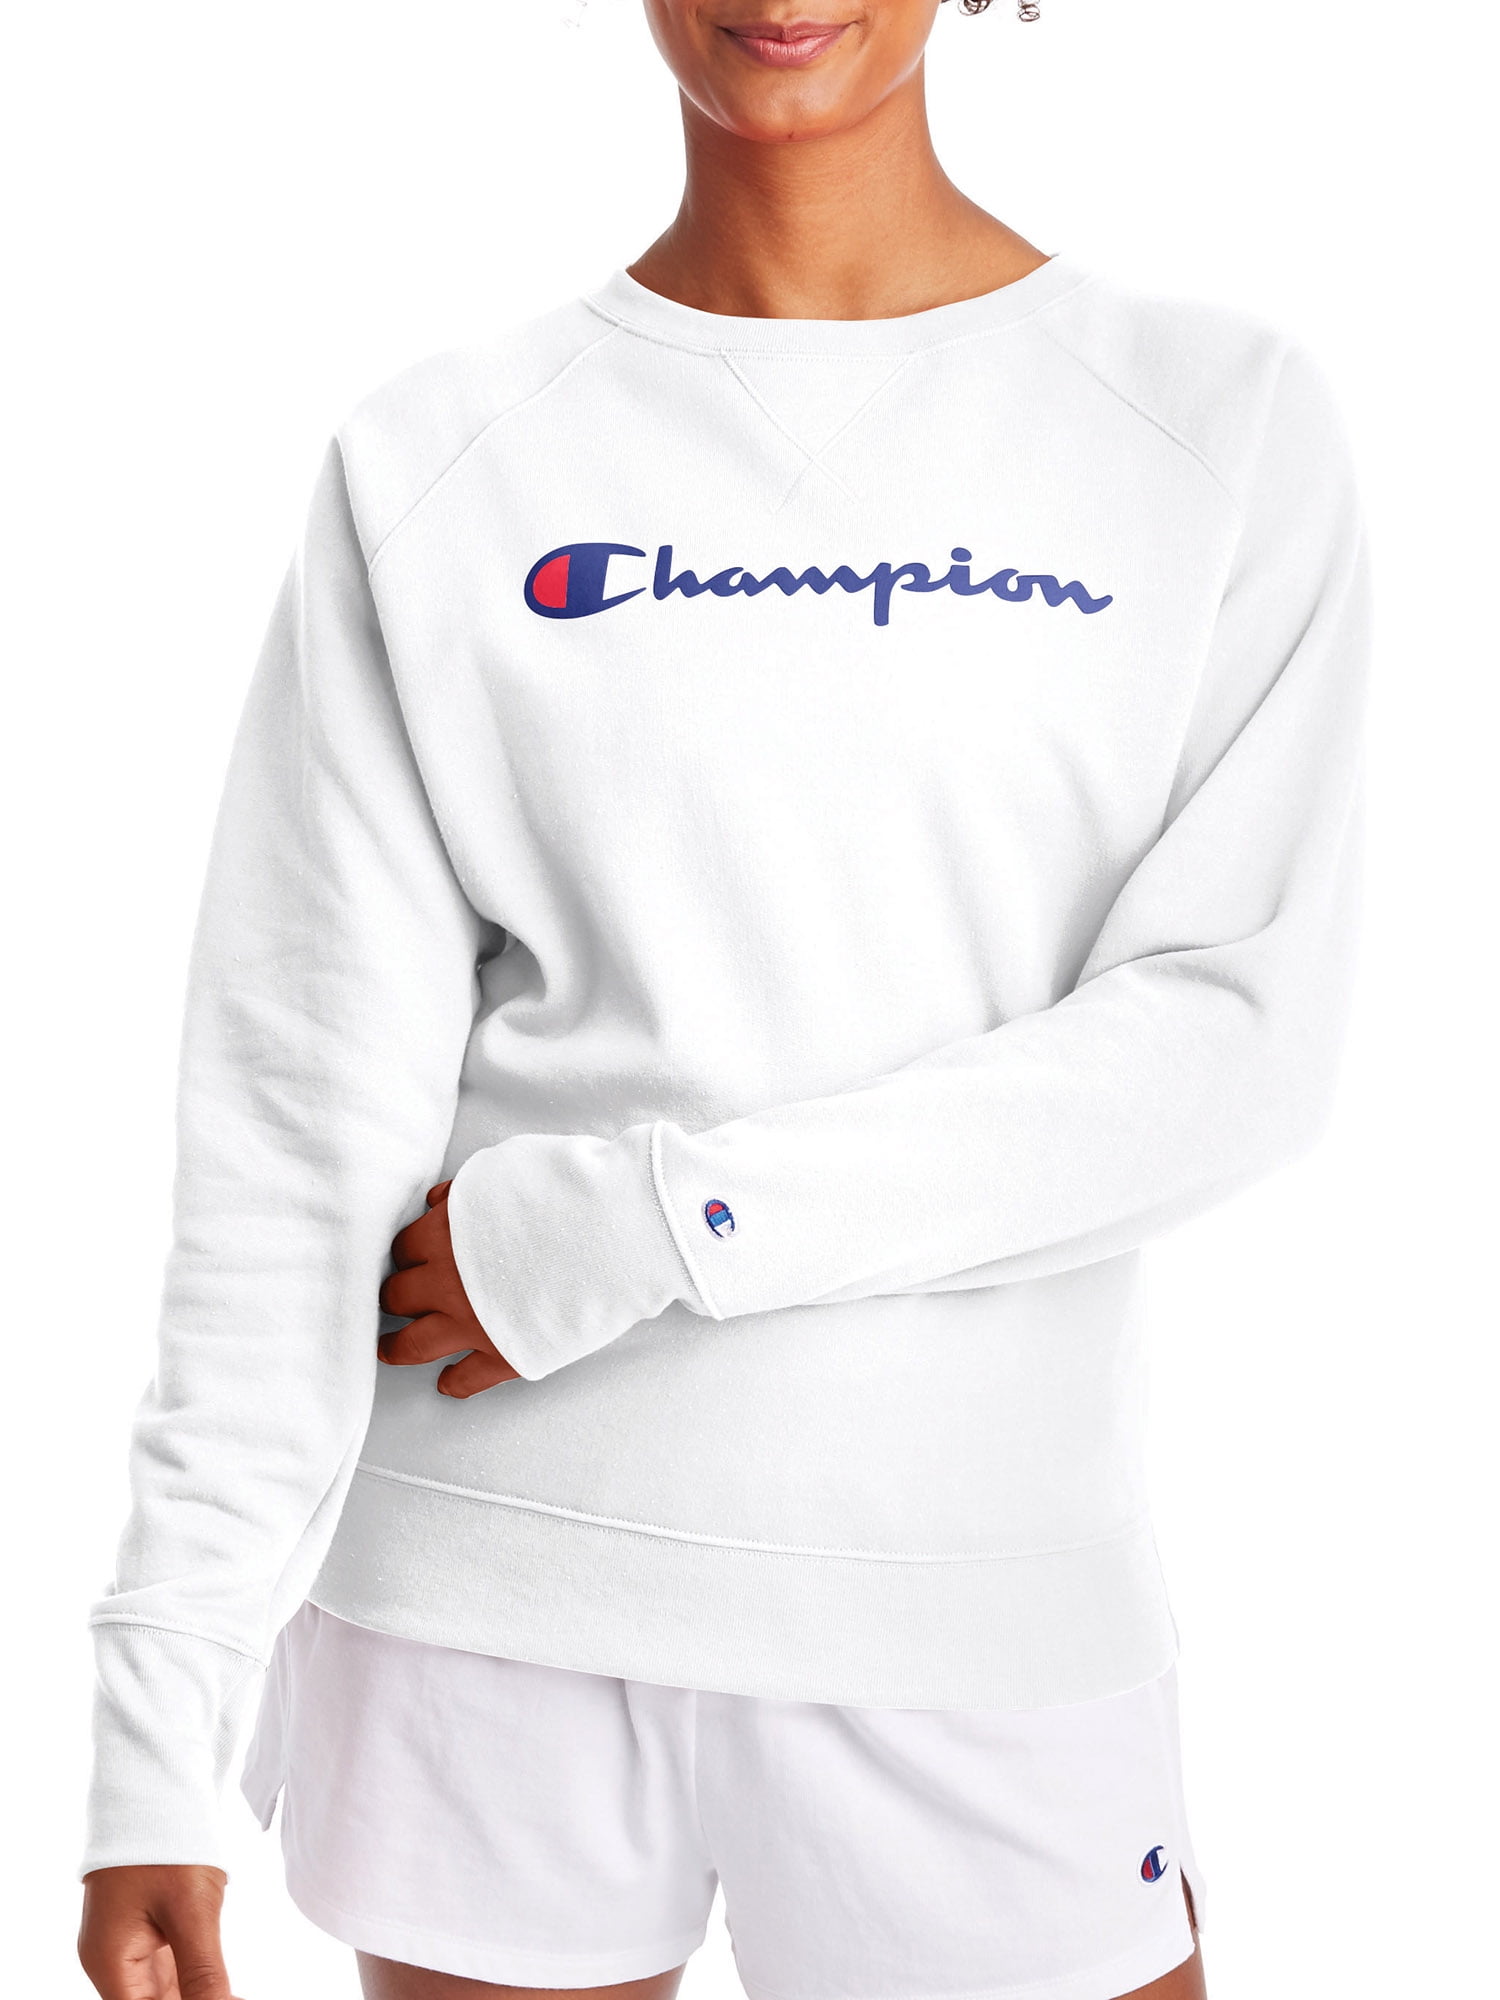 Champion Womens Plus-Size Powerblend Boyfriend Crew Sweater Sweatshirt